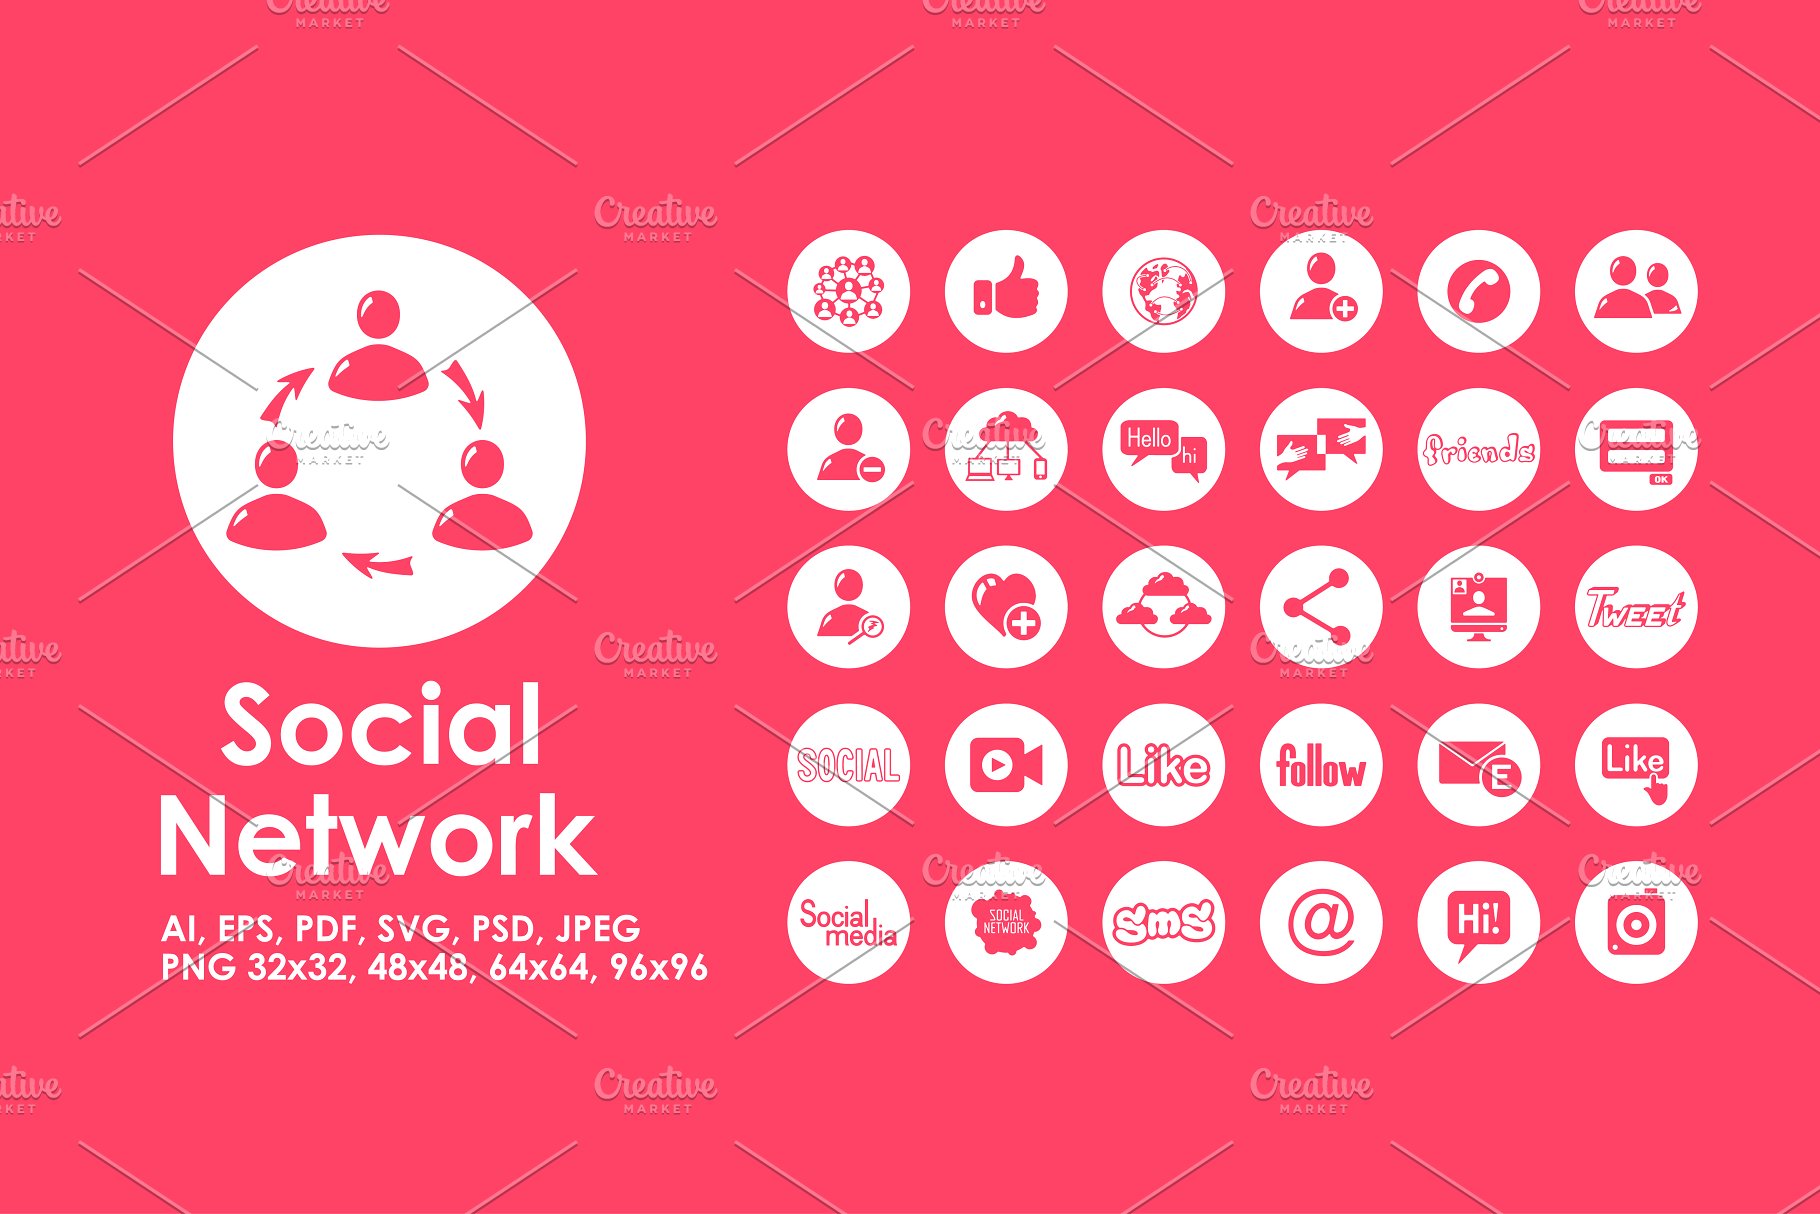 简洁网络社交应用图标 Social network icon